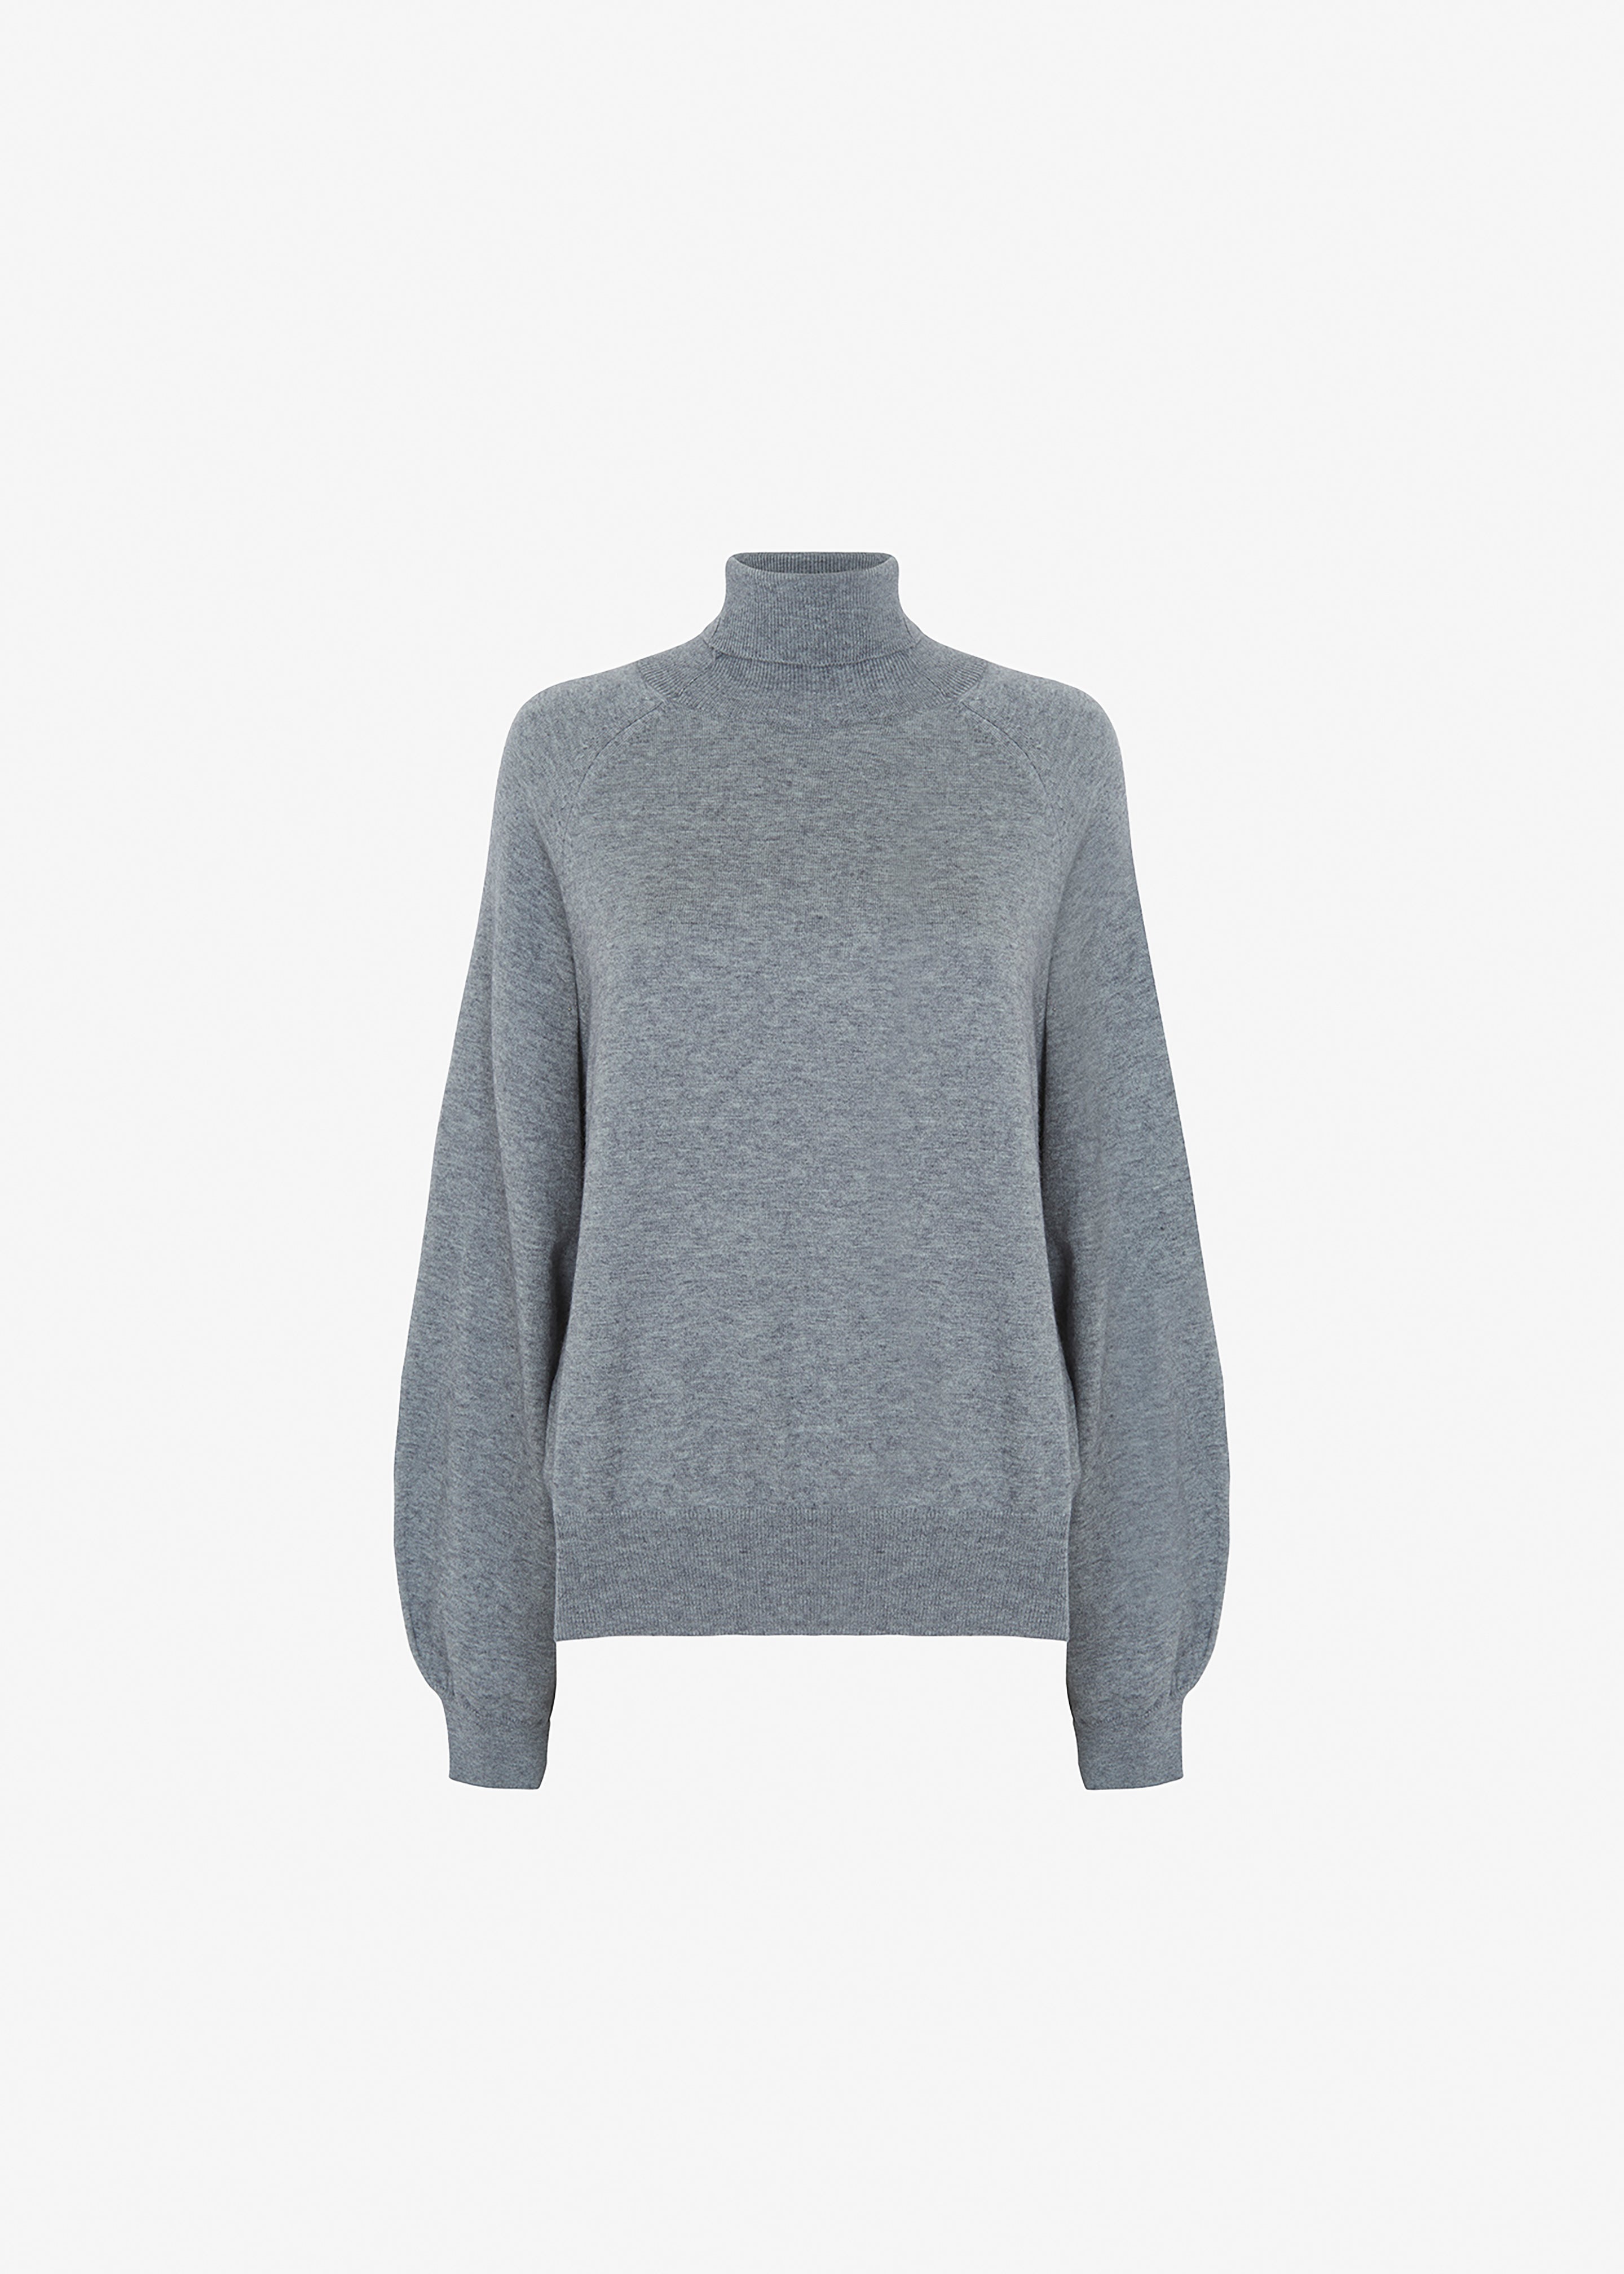 Variel Turtleneck Sweater - Charcoal - 7